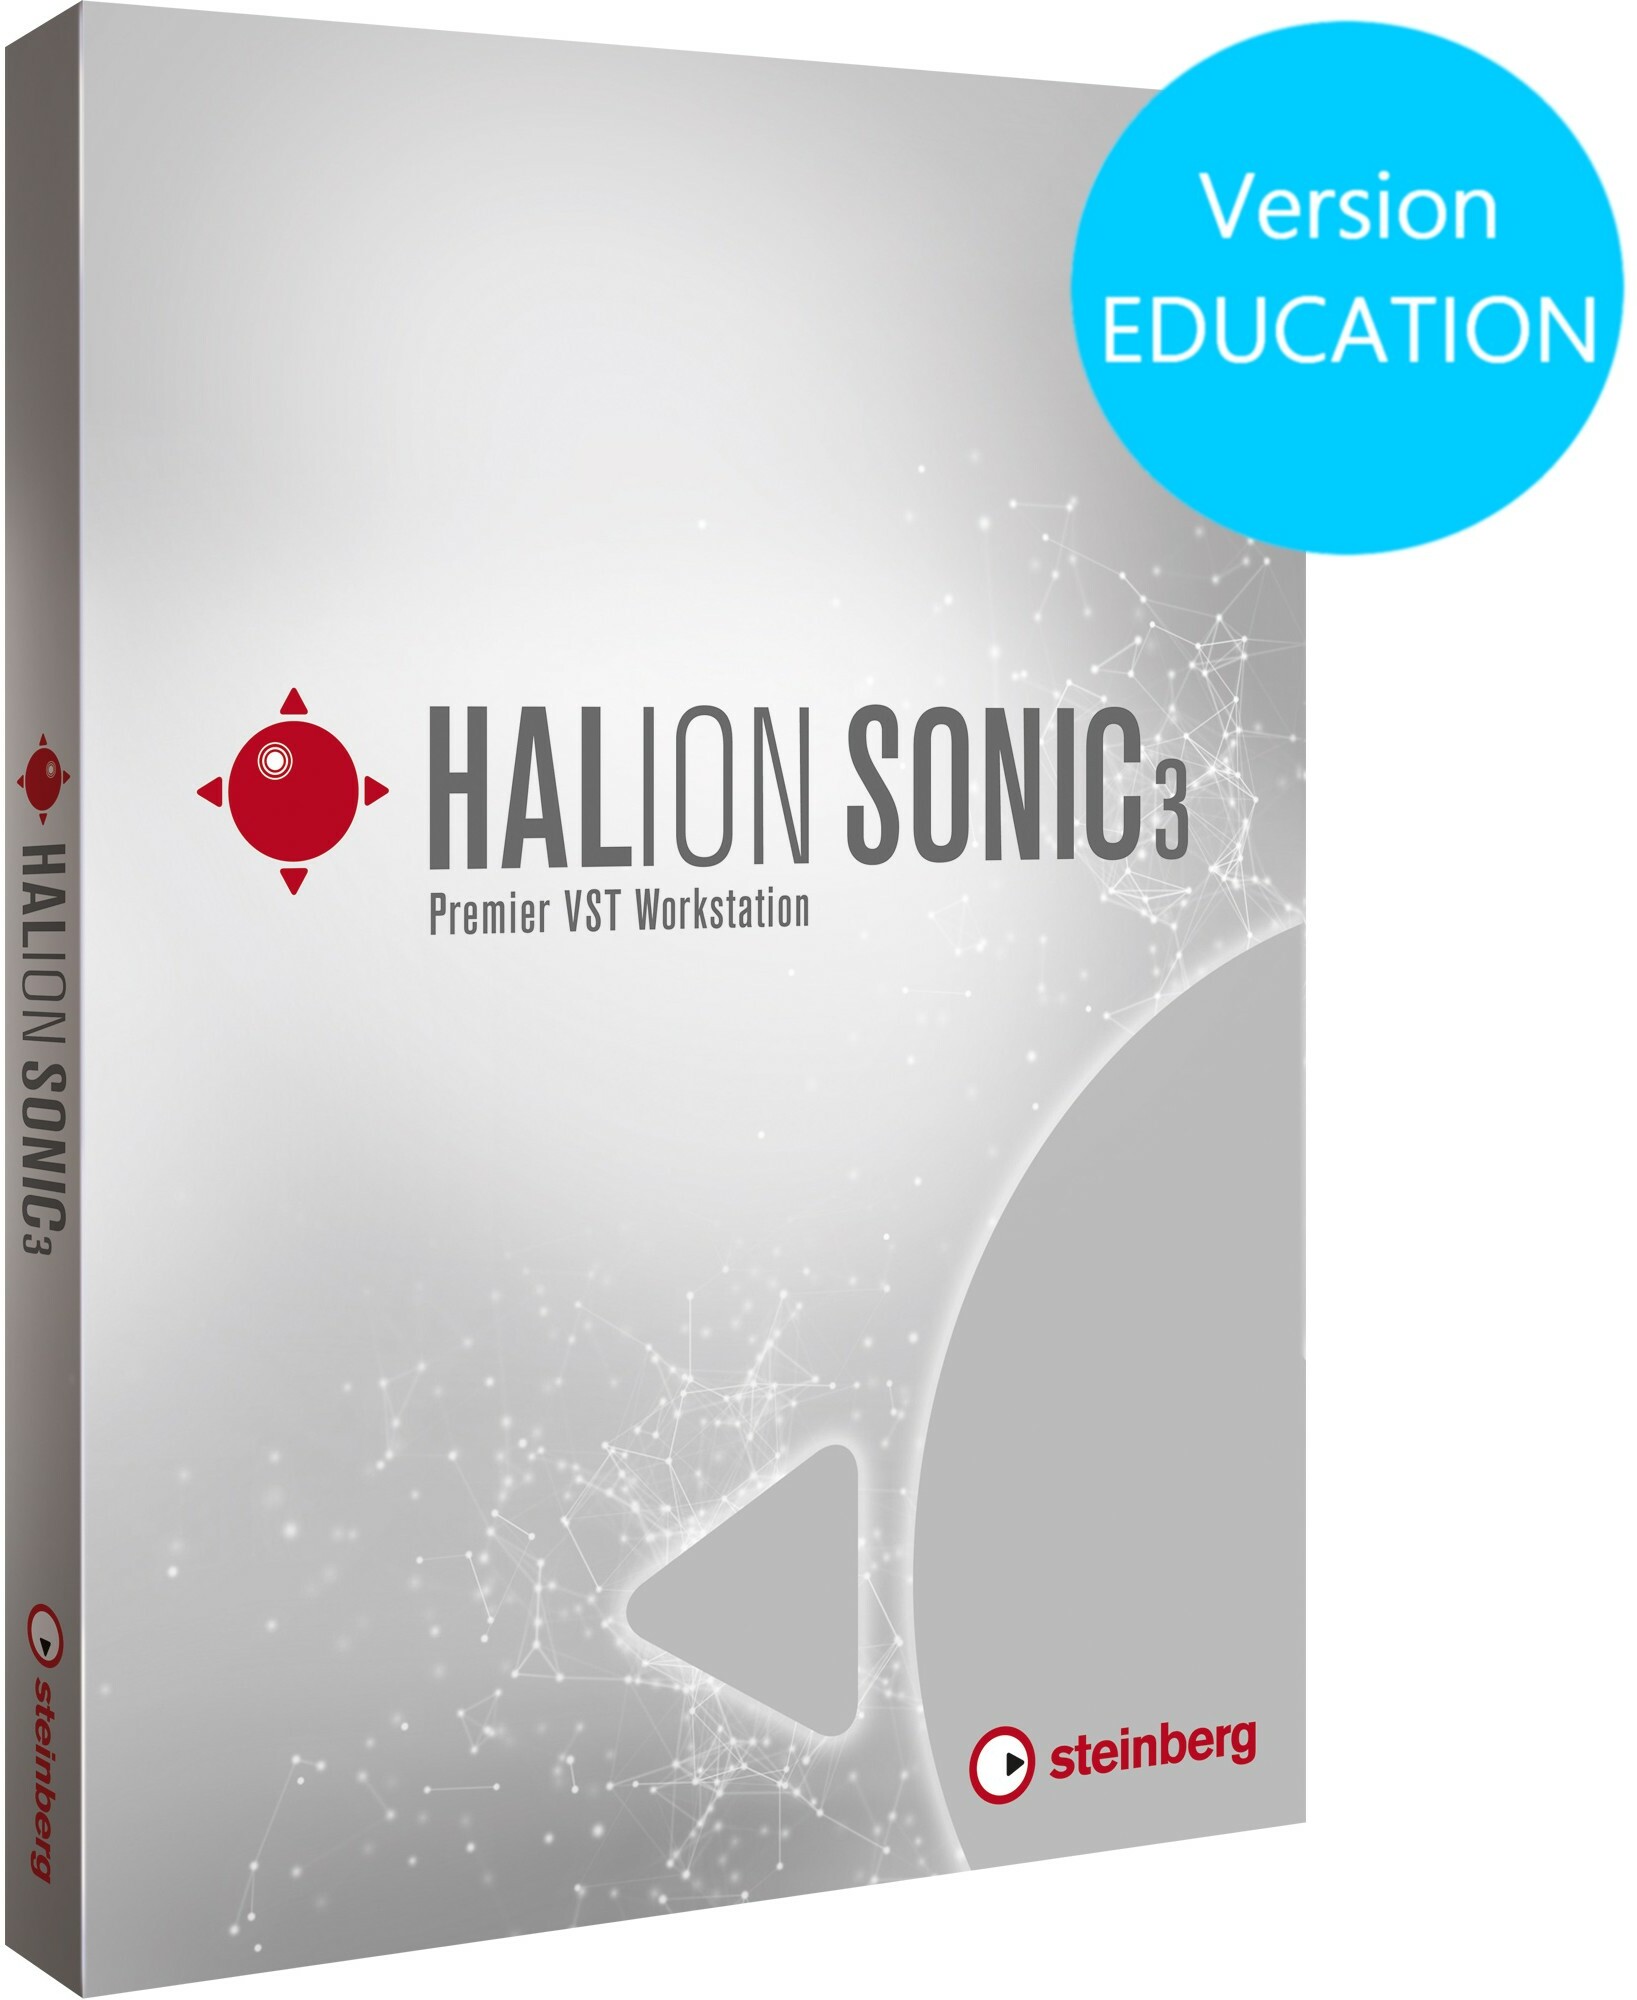 Steinberg Halion Sonic 3 Education - Virtuellen Instrumente Soundbank - Main picture